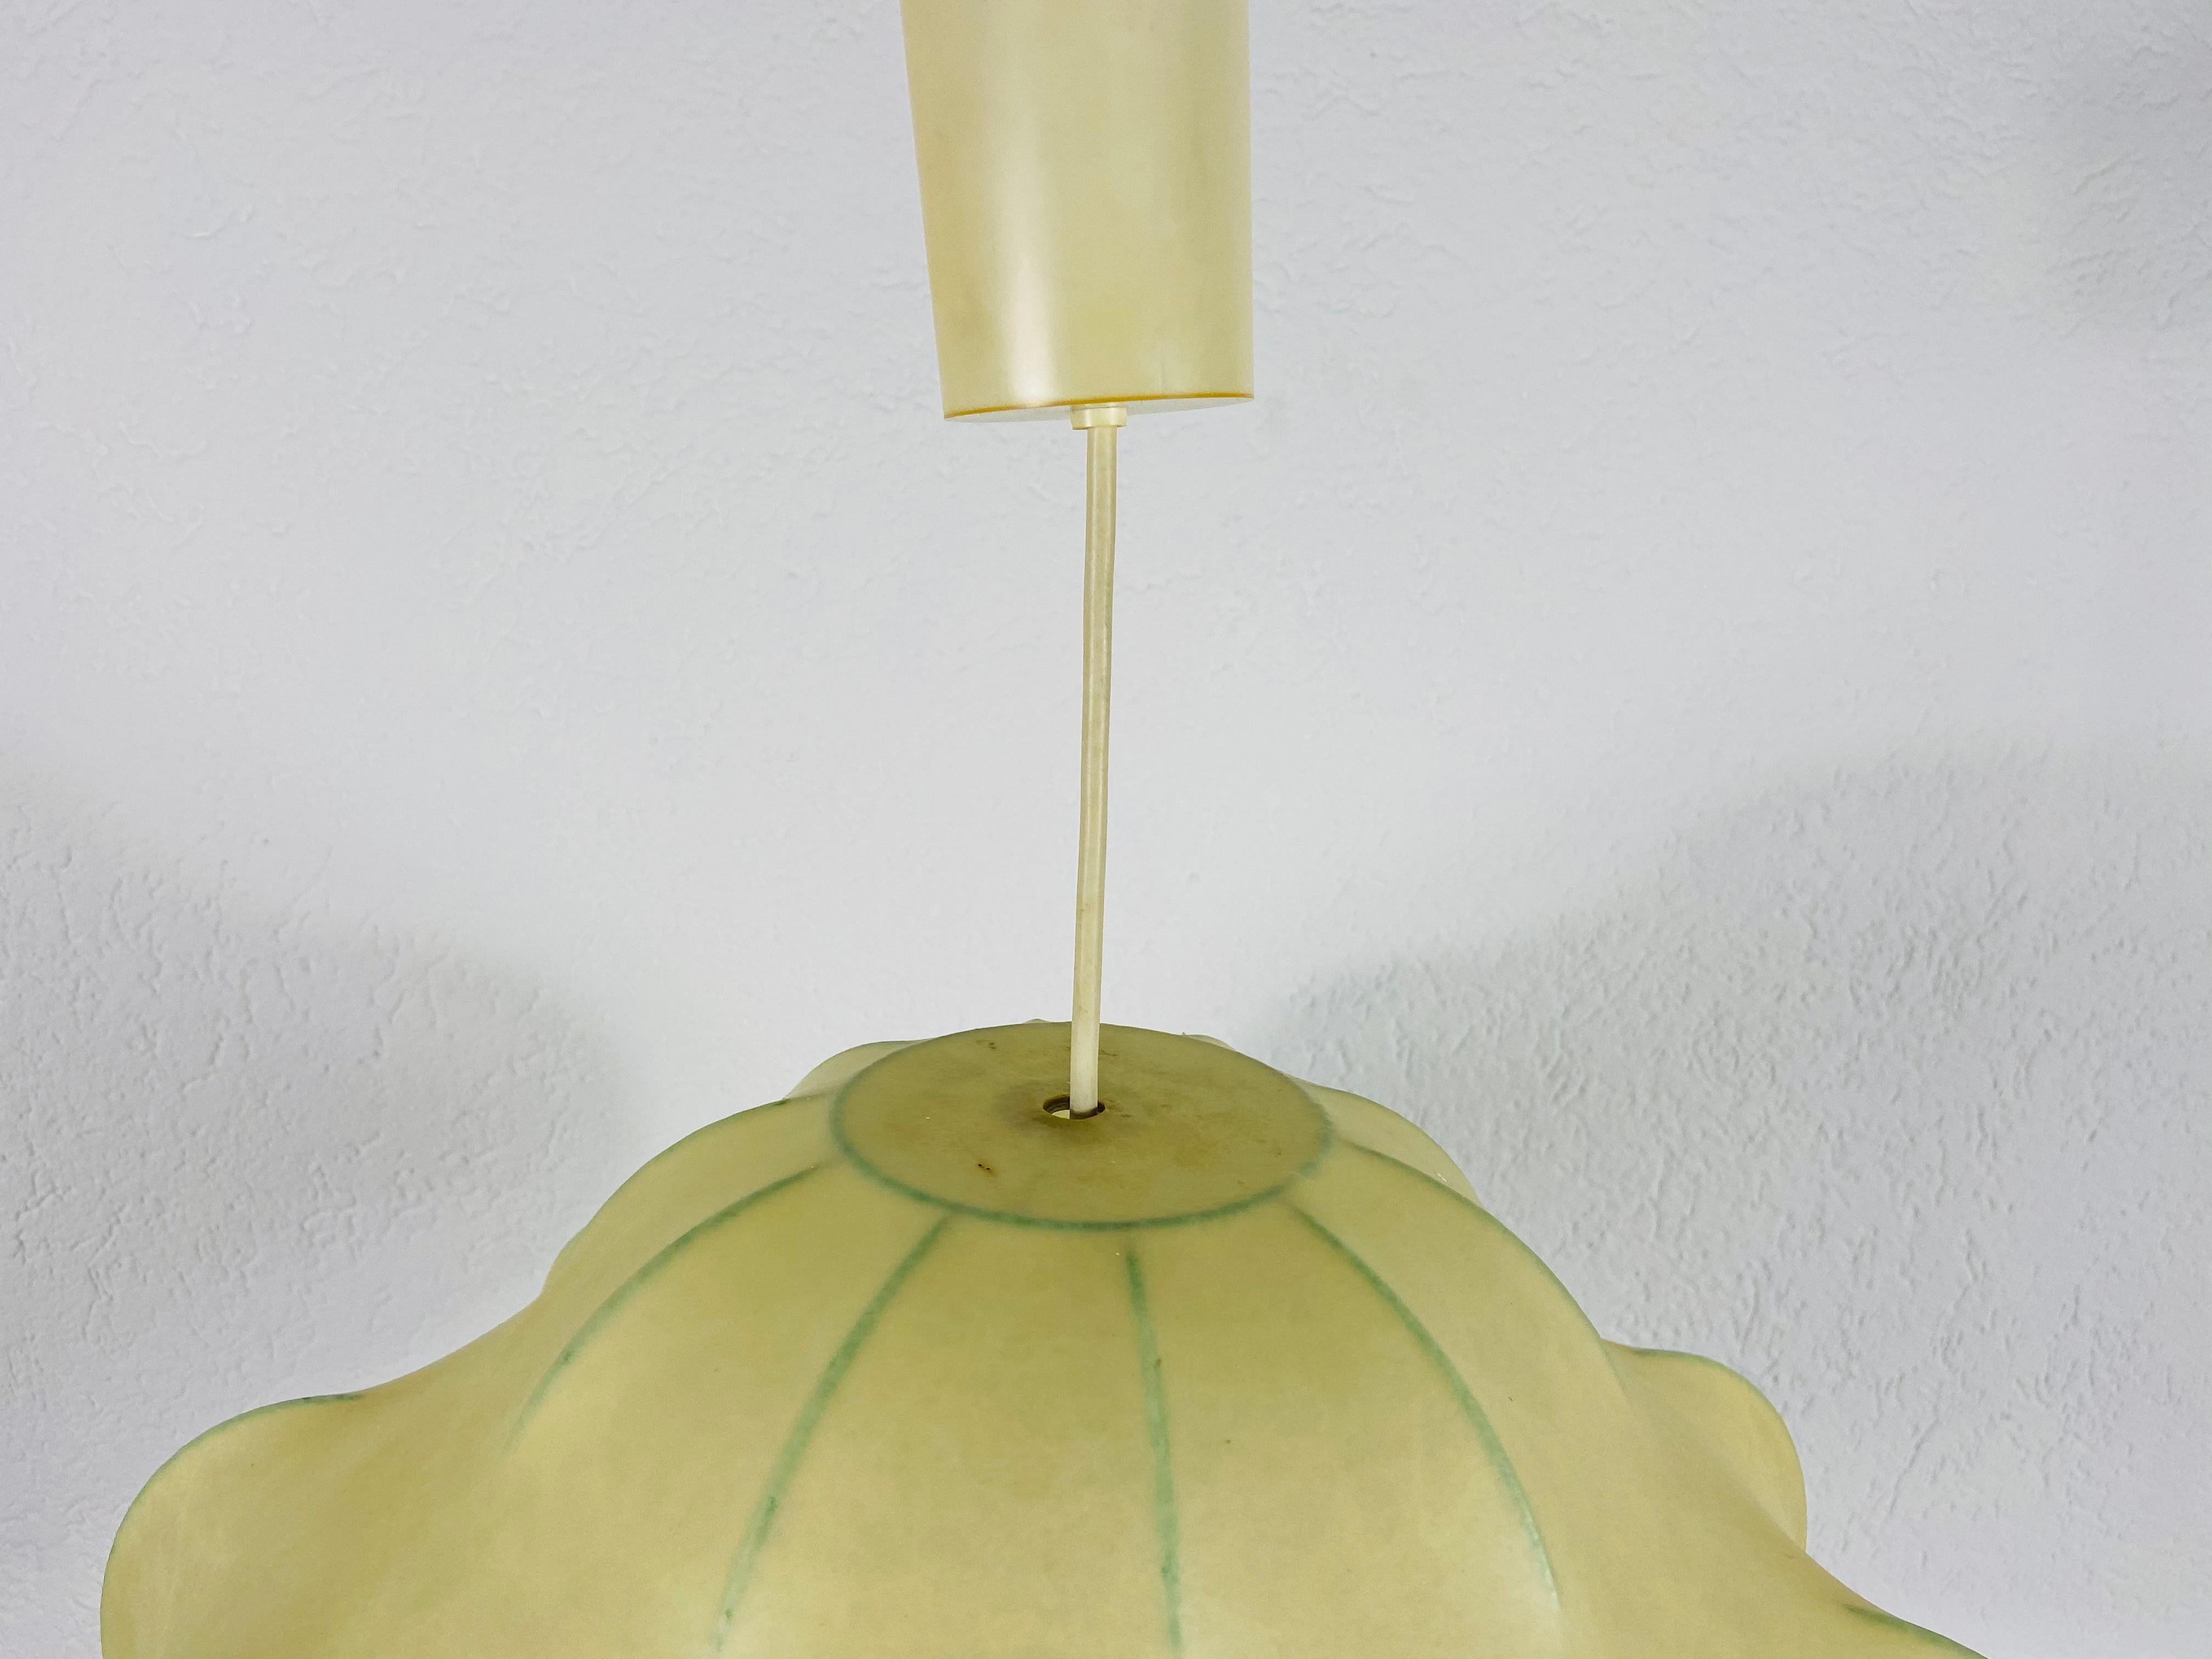 Synthetic Rare Mid-Century Modern Cocoon Pendant Light, 1960s, Italy